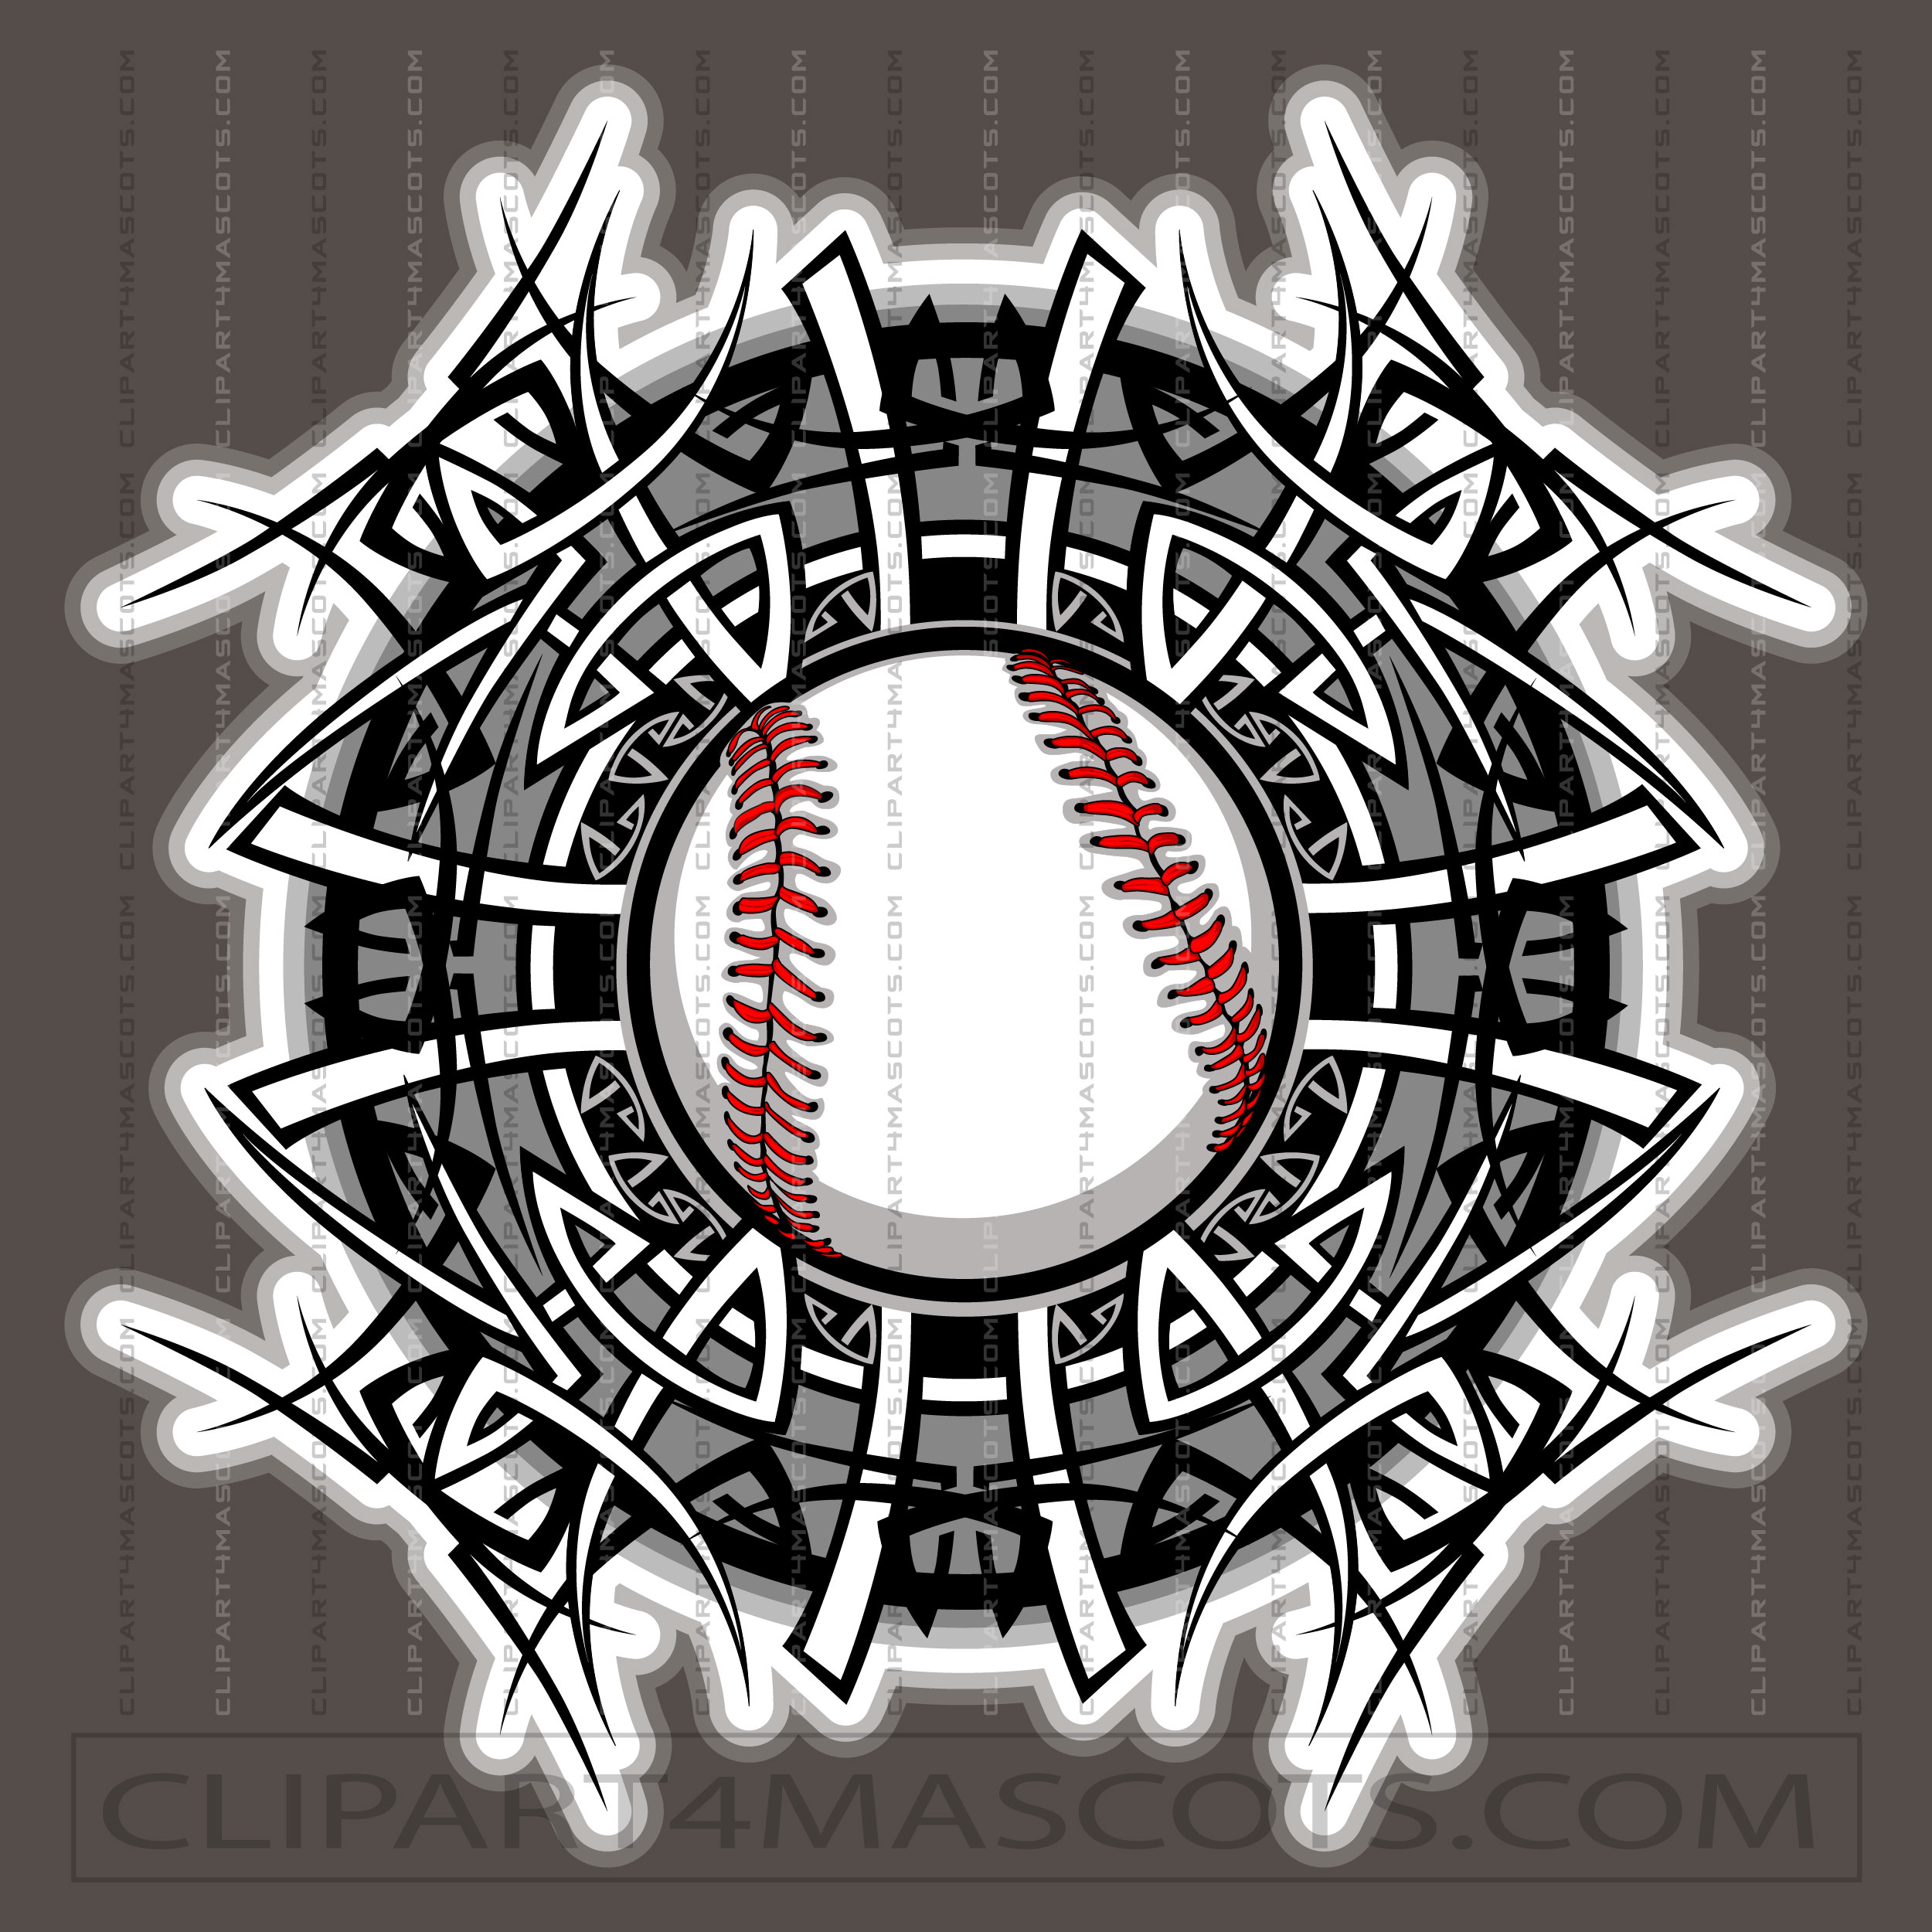 Clip Art Baseball Graphic